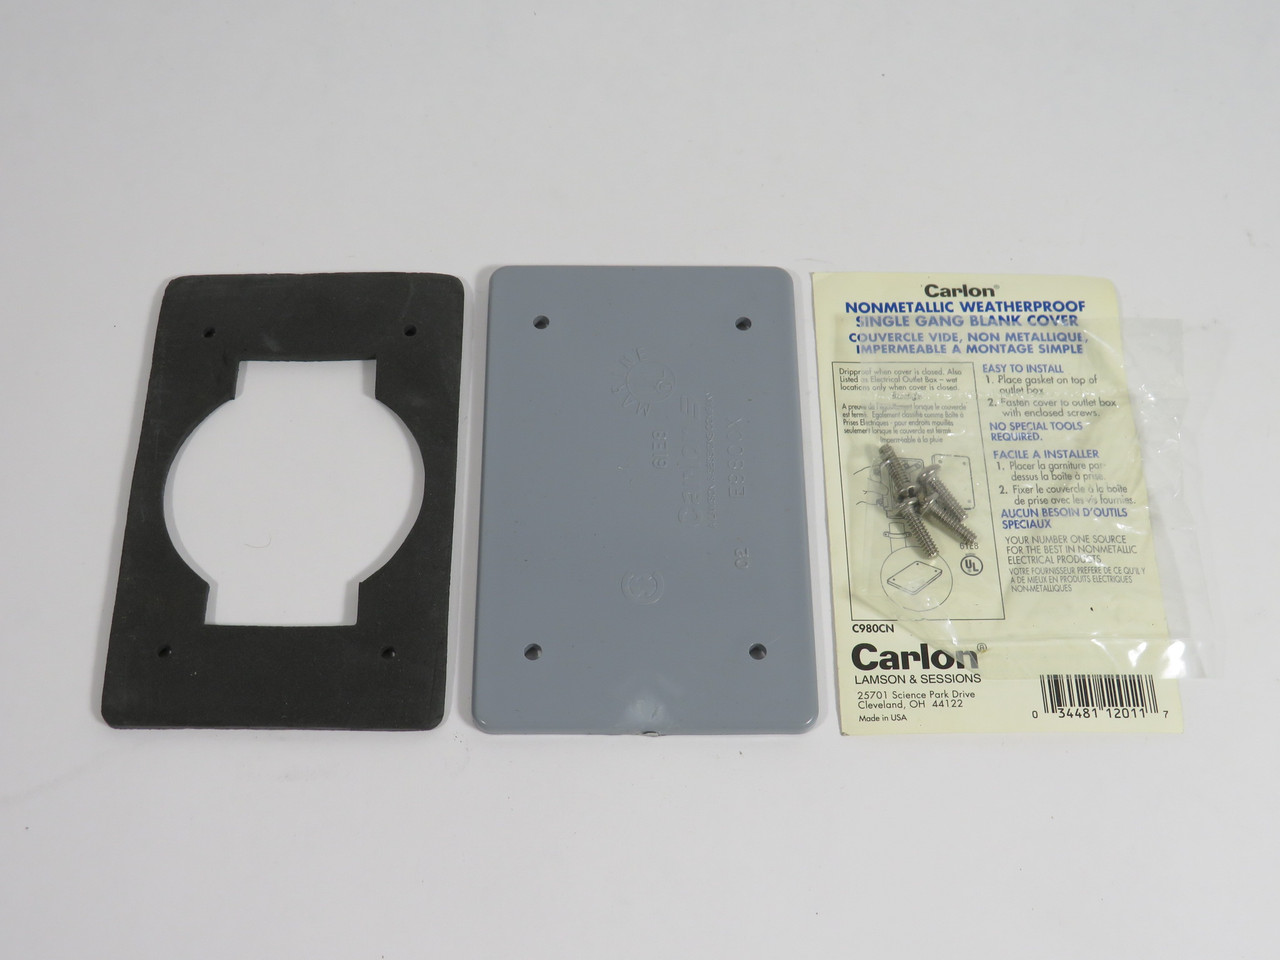 Carlon C980CN Nonmetallic Weatherproof 1-Gang Blank Cover Plate E980CX NOP